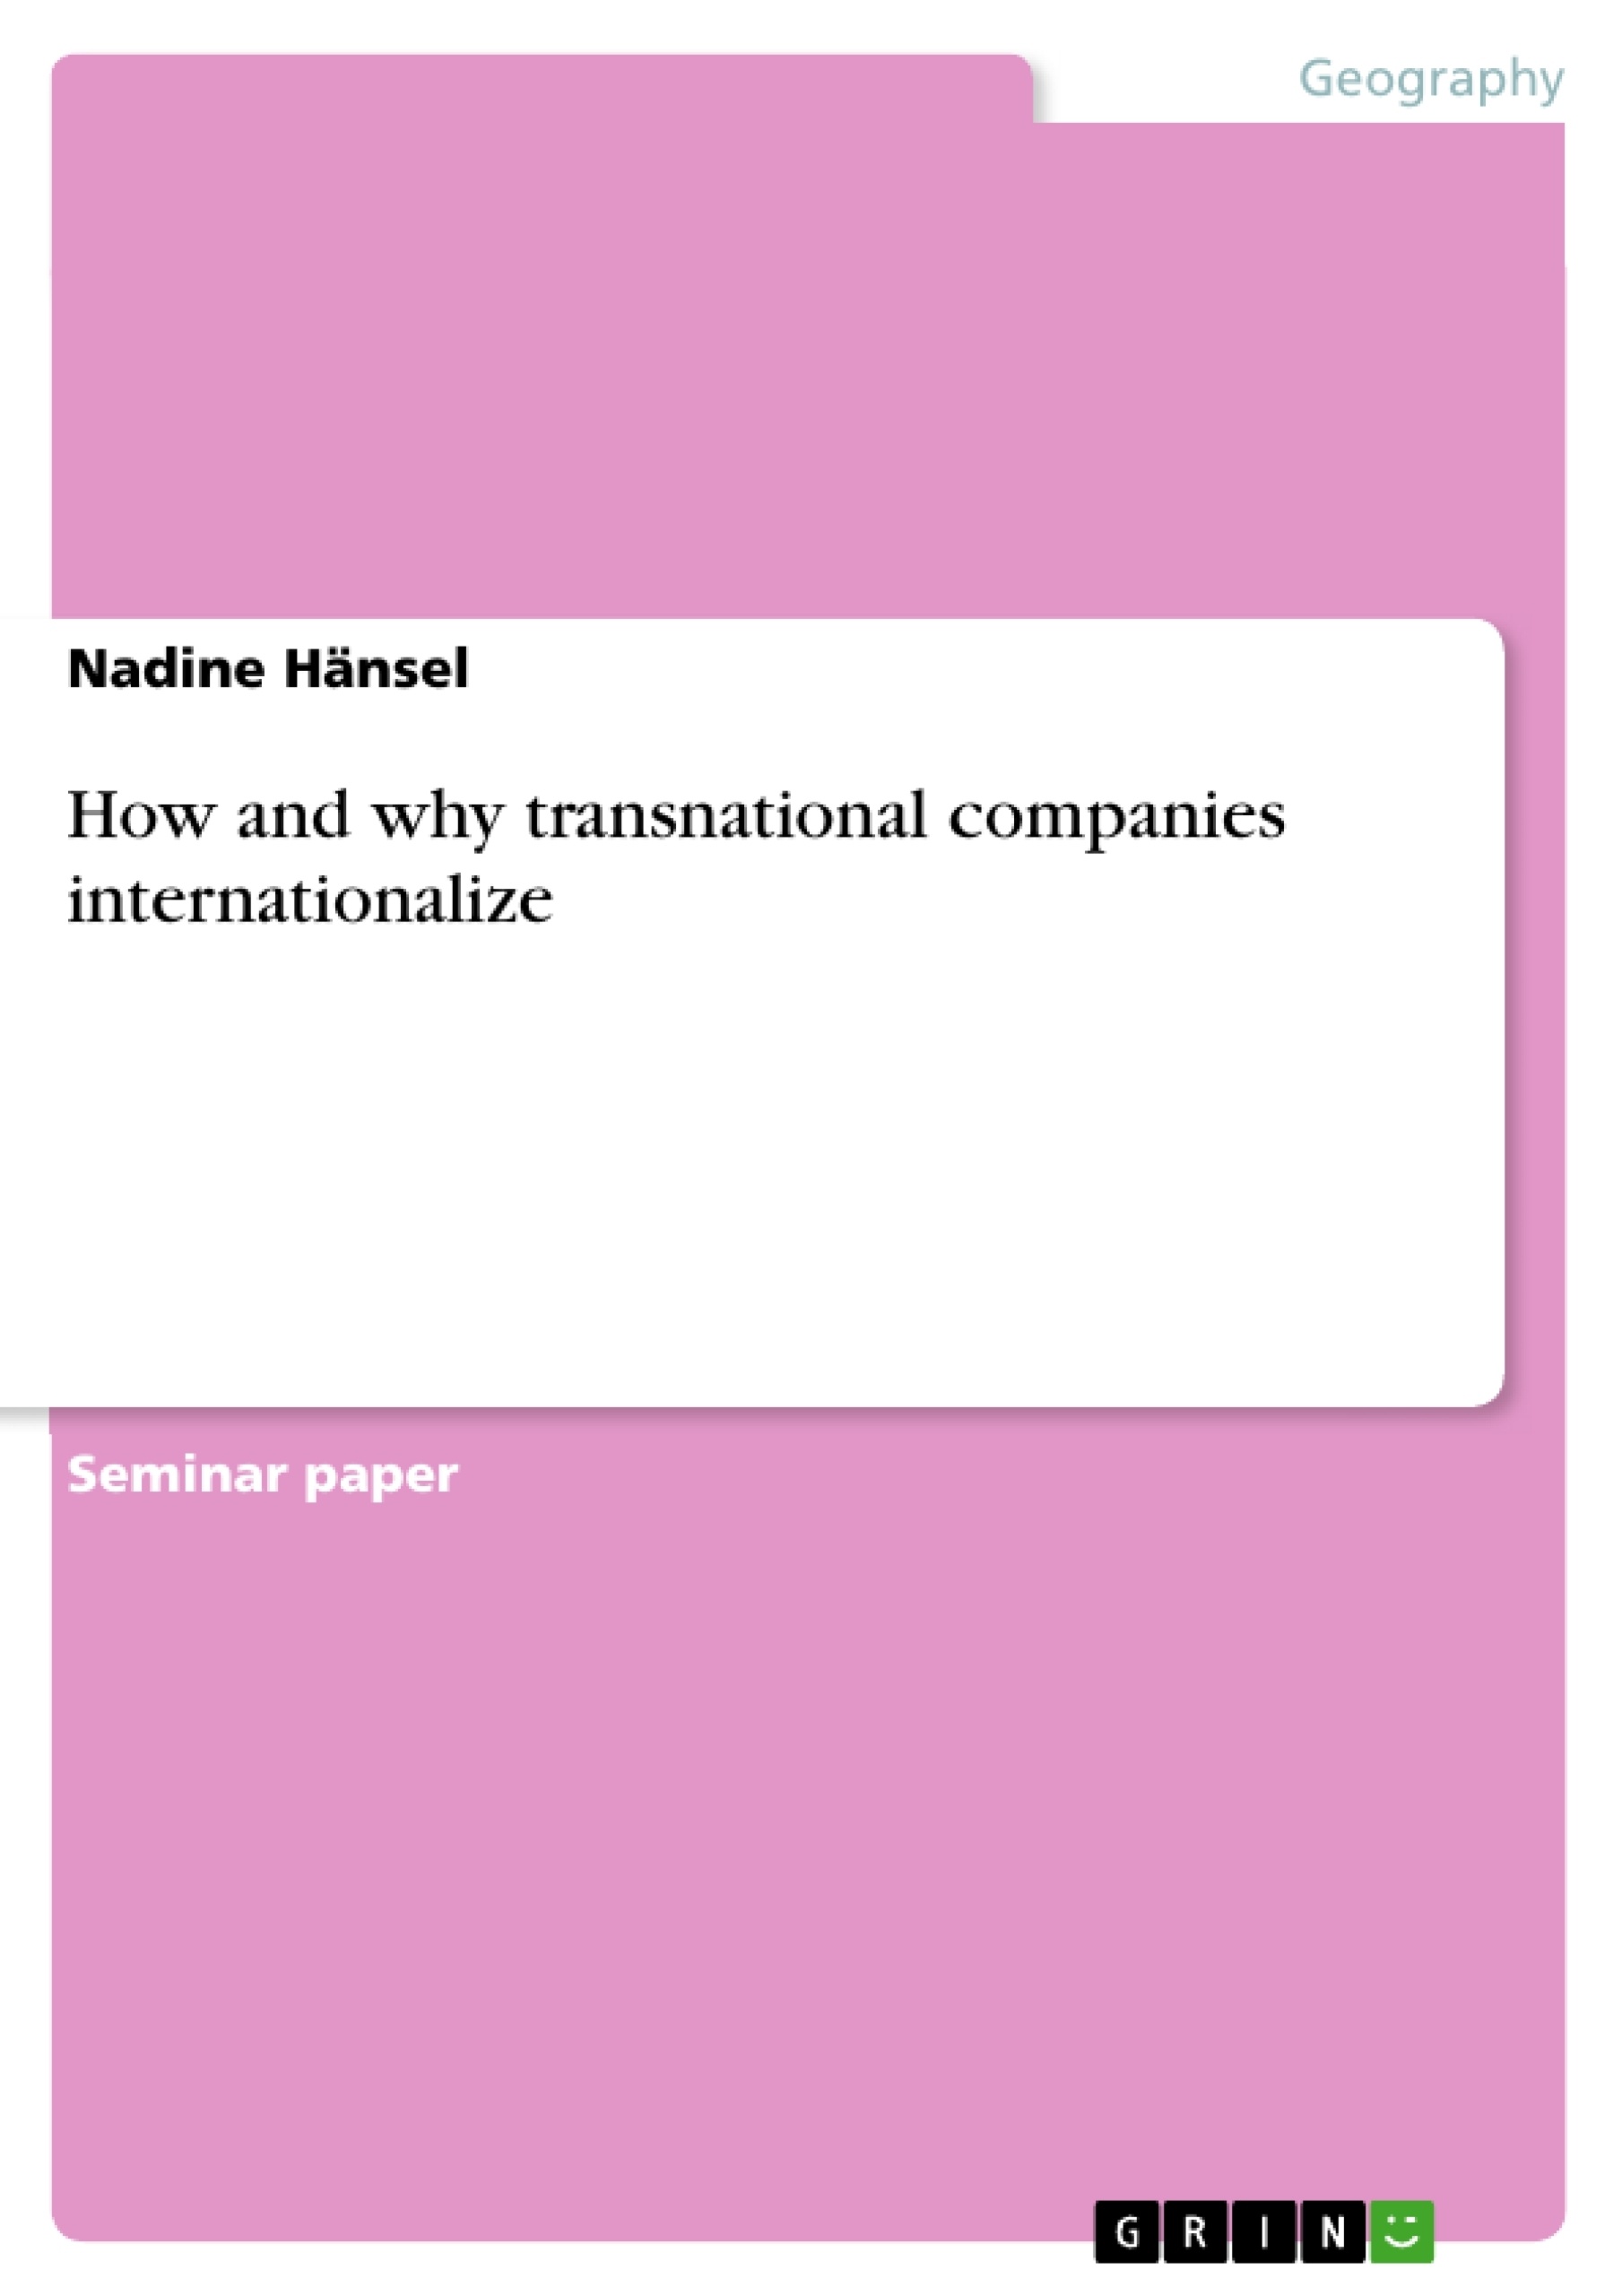 why do companies internationalise